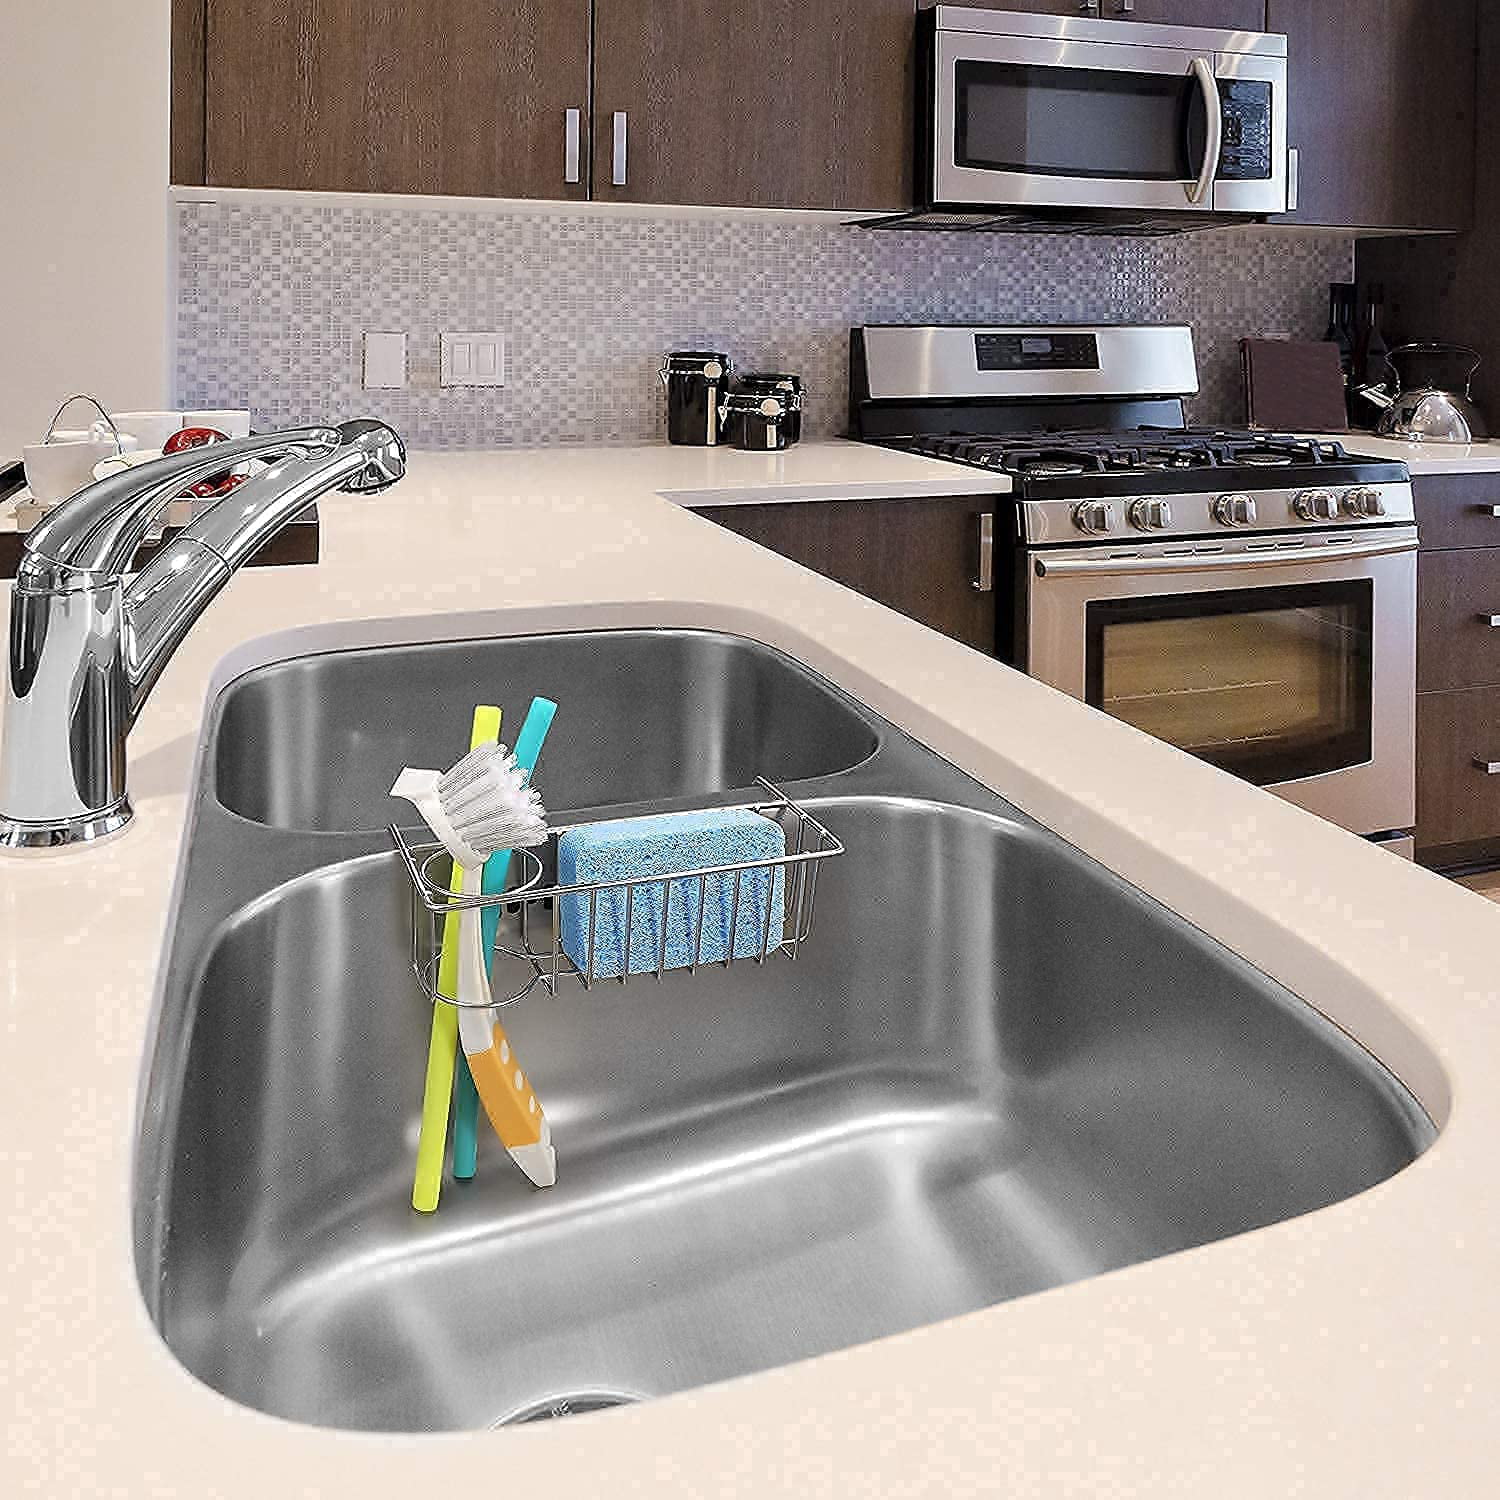 Dish Wand Holder Adjustable Kitchen Dishwand Sink Caddy,Sponge Holder,Brush  Holder,Dish Cloth Holder,Rust Proof Water Proof, No Drilling, No Adhesive